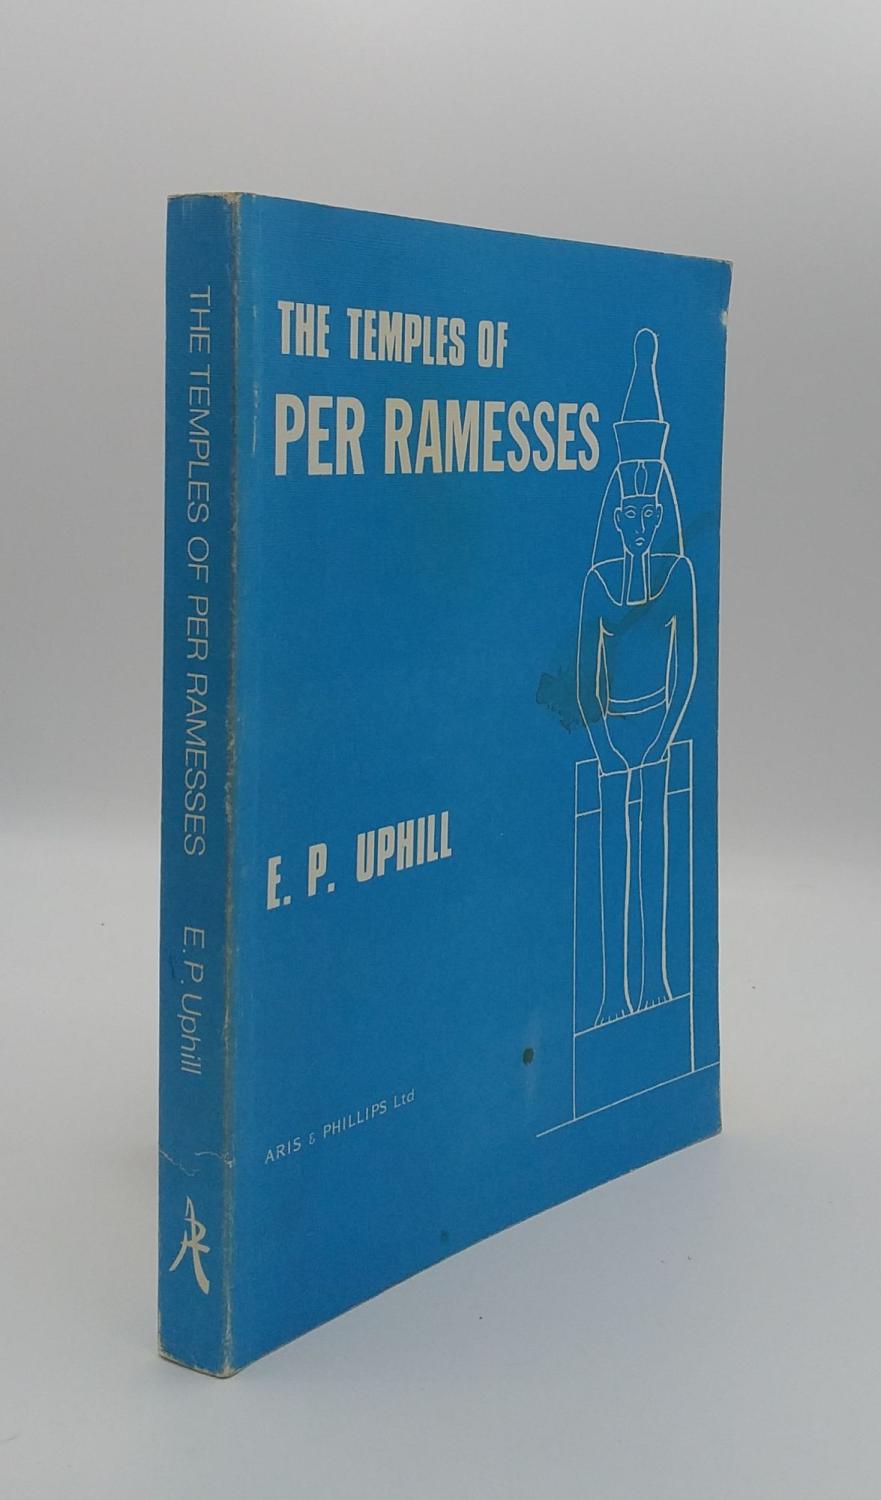 THE TEMPLES OF PER RAMESSES - UPHILL E.P.